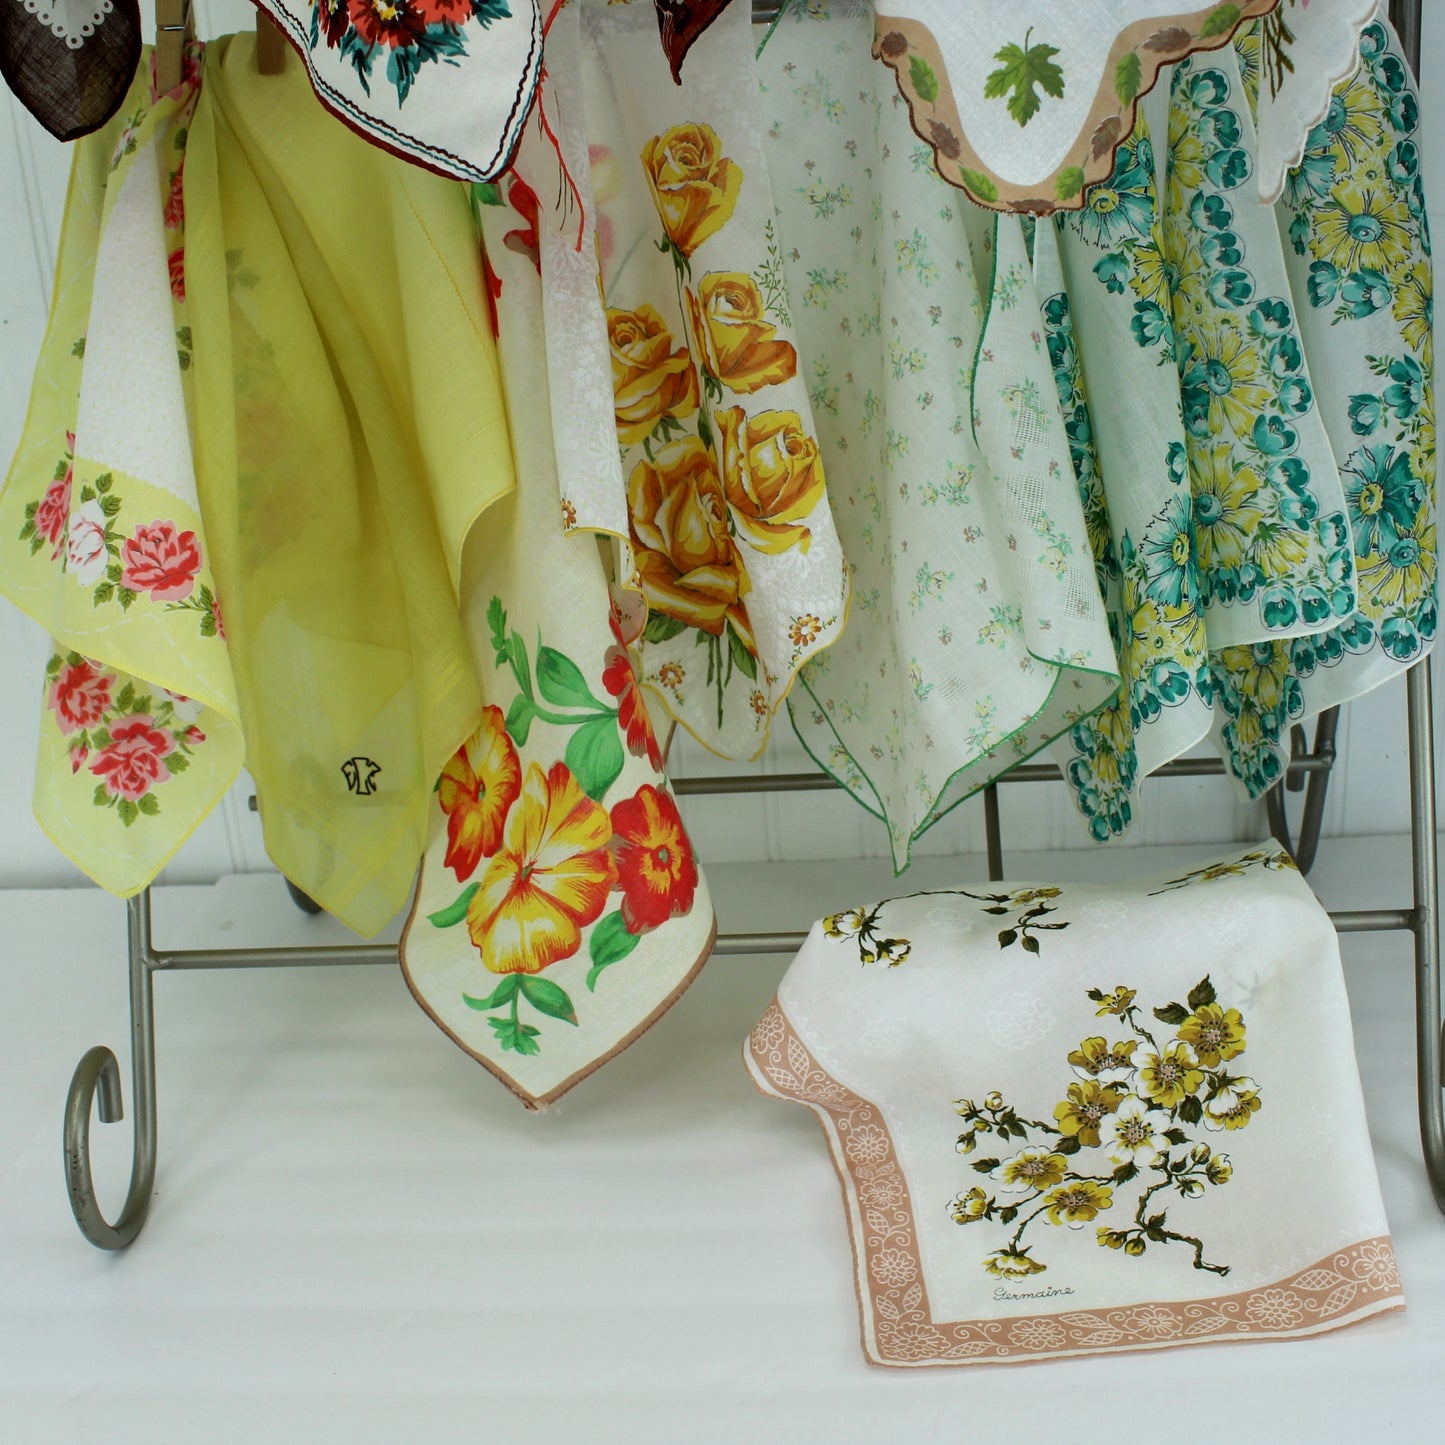 Collection 17 Handkerchiefs in Hand Made Foldup Case DIY Repurpose Lot yellows orange greens